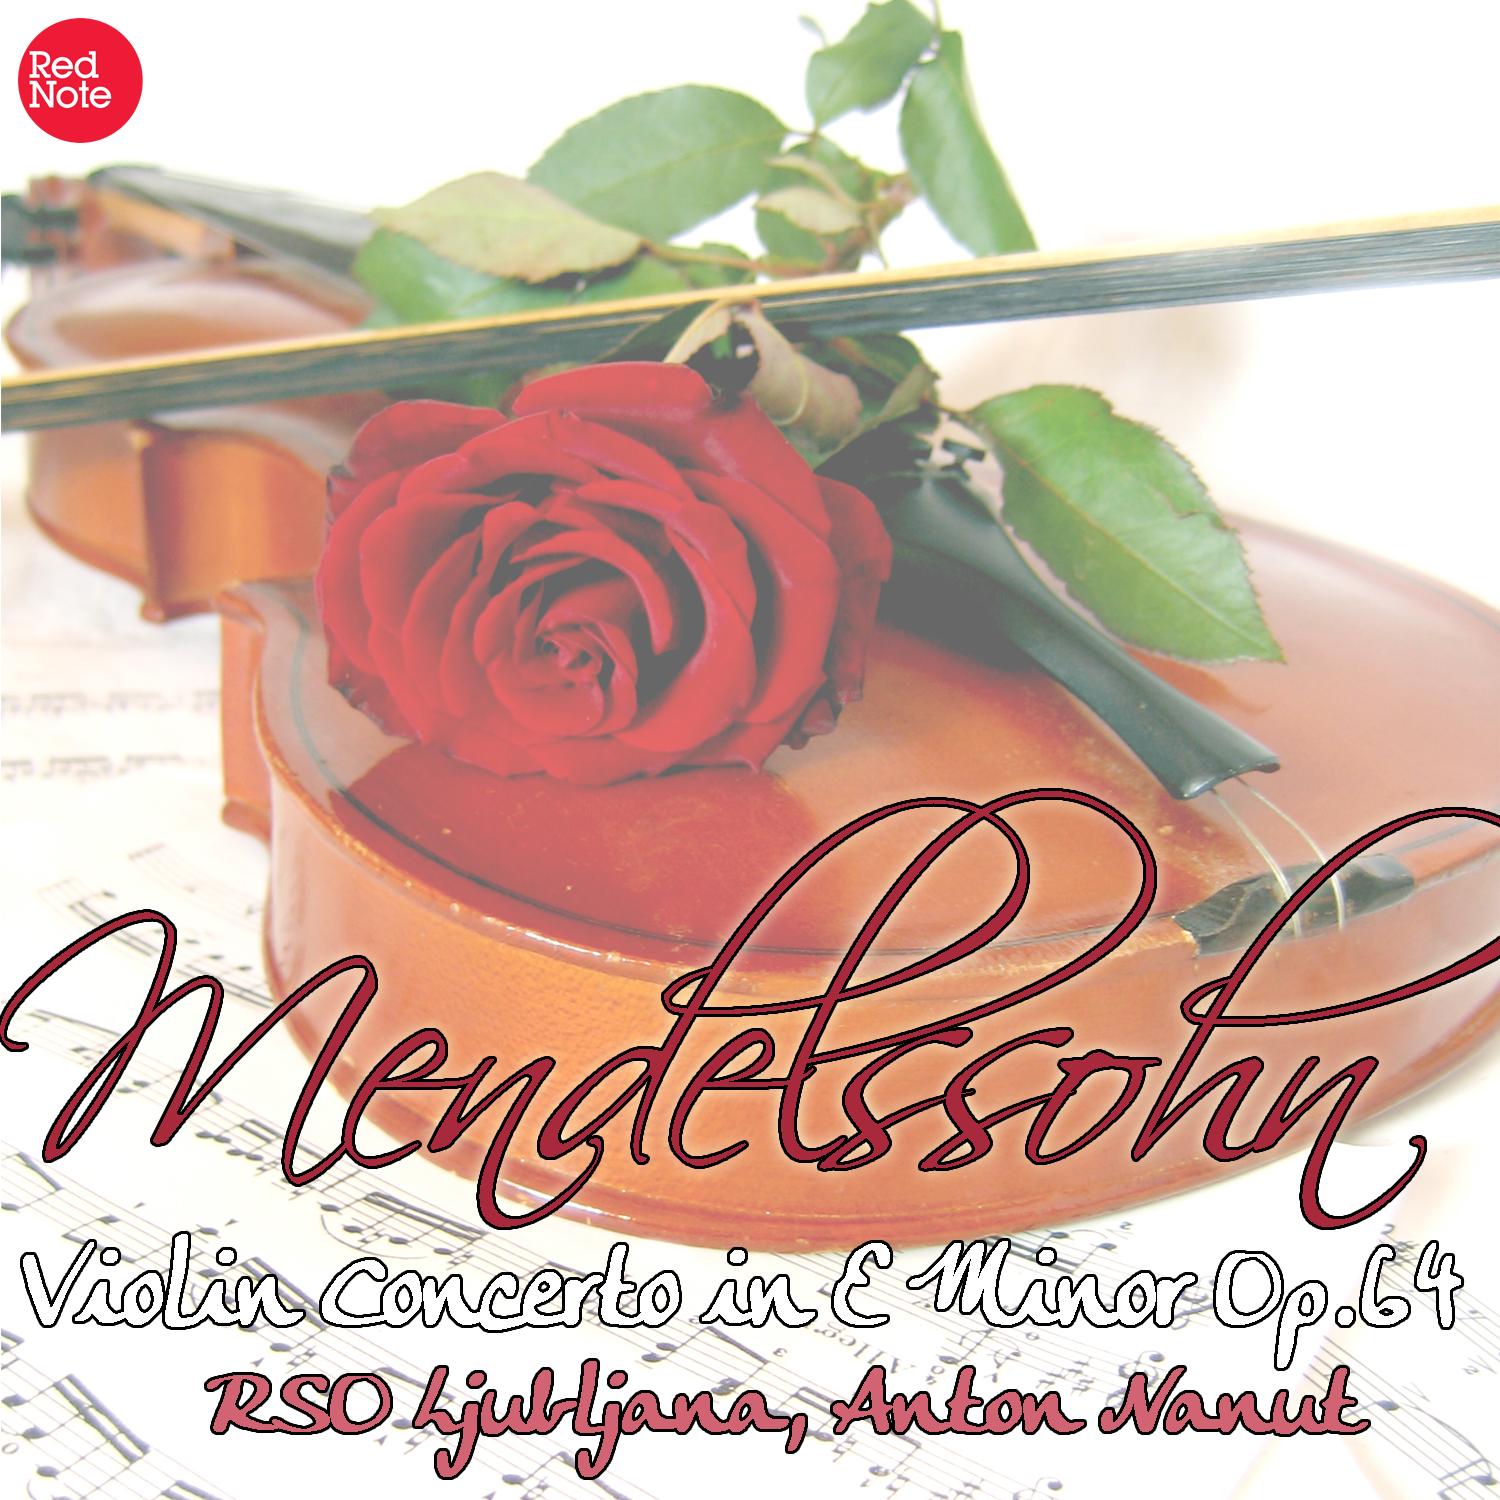 Mendelssohn: Violin Concerto in E Minor Op.64